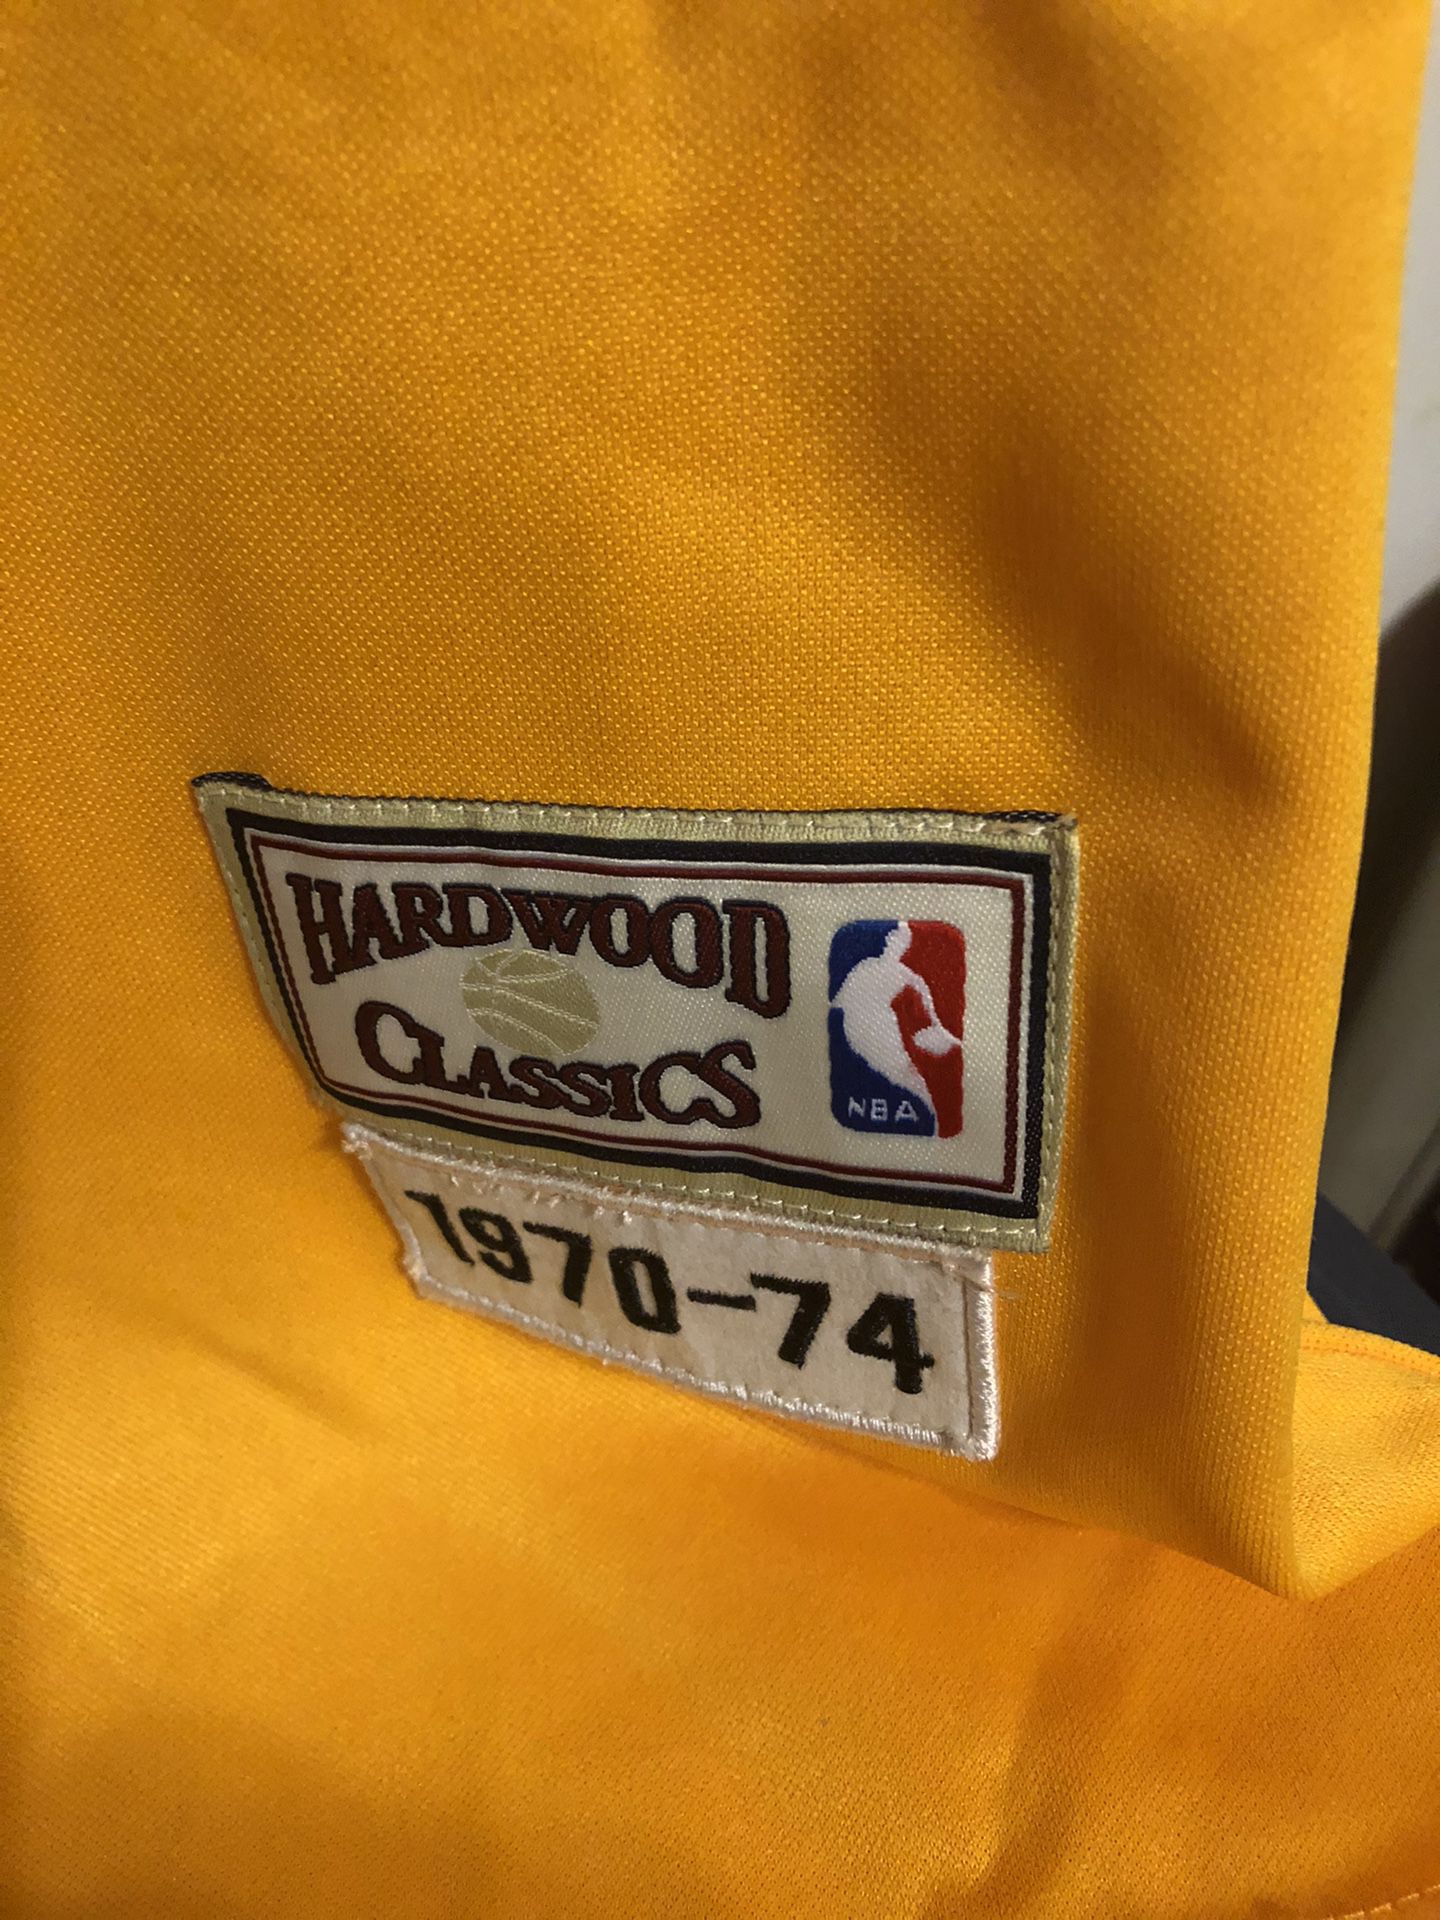 Cleveland Cavaliers' New Hardwood Classic 1970-74 Jerseys